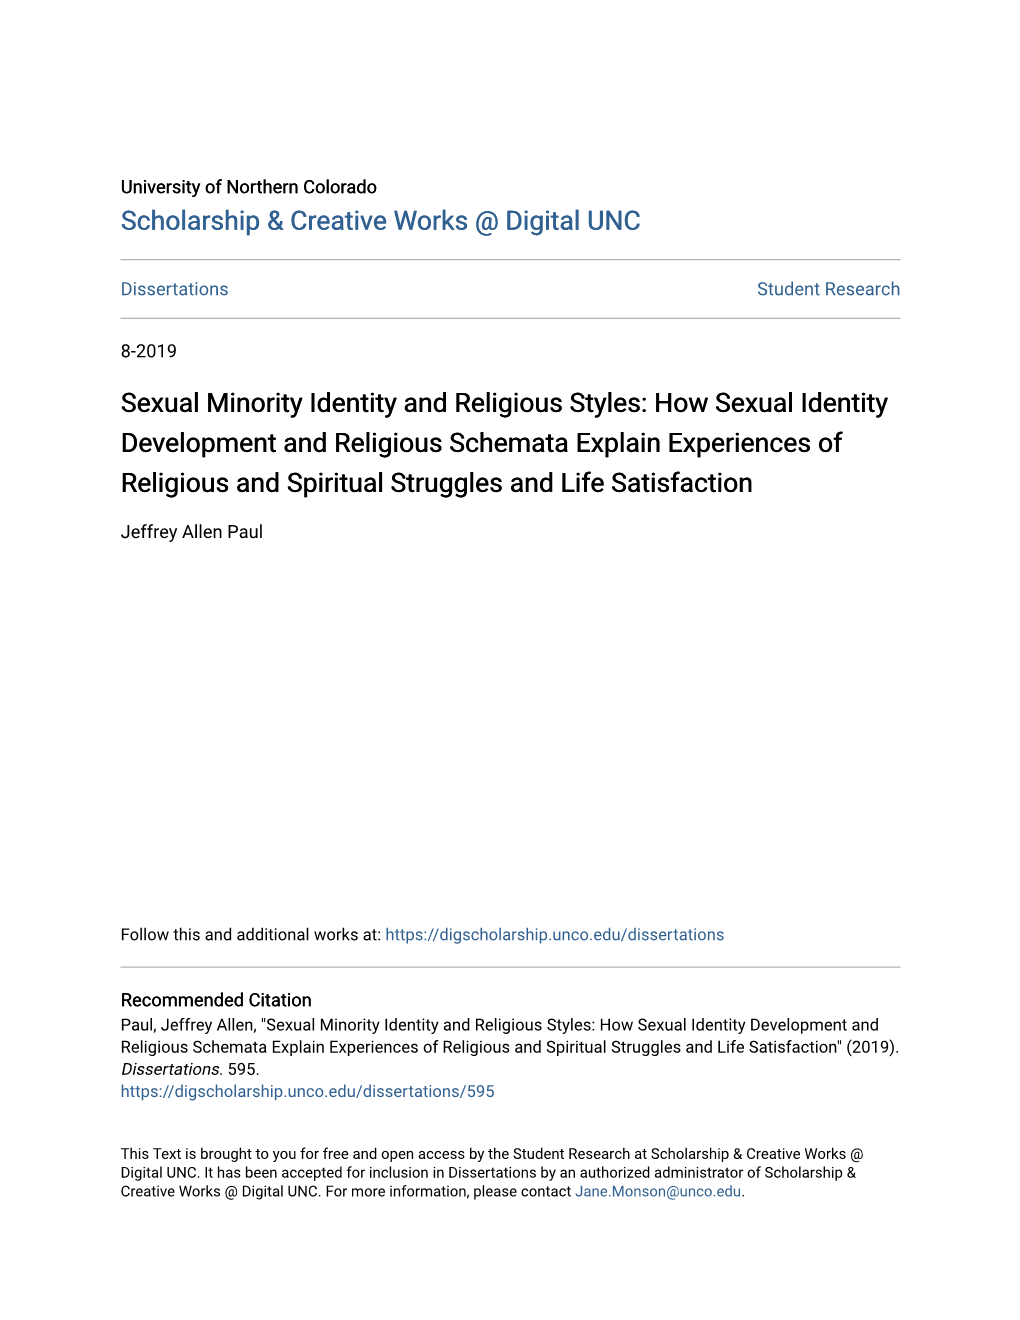 Sexual Minority Identity and Religious Styles